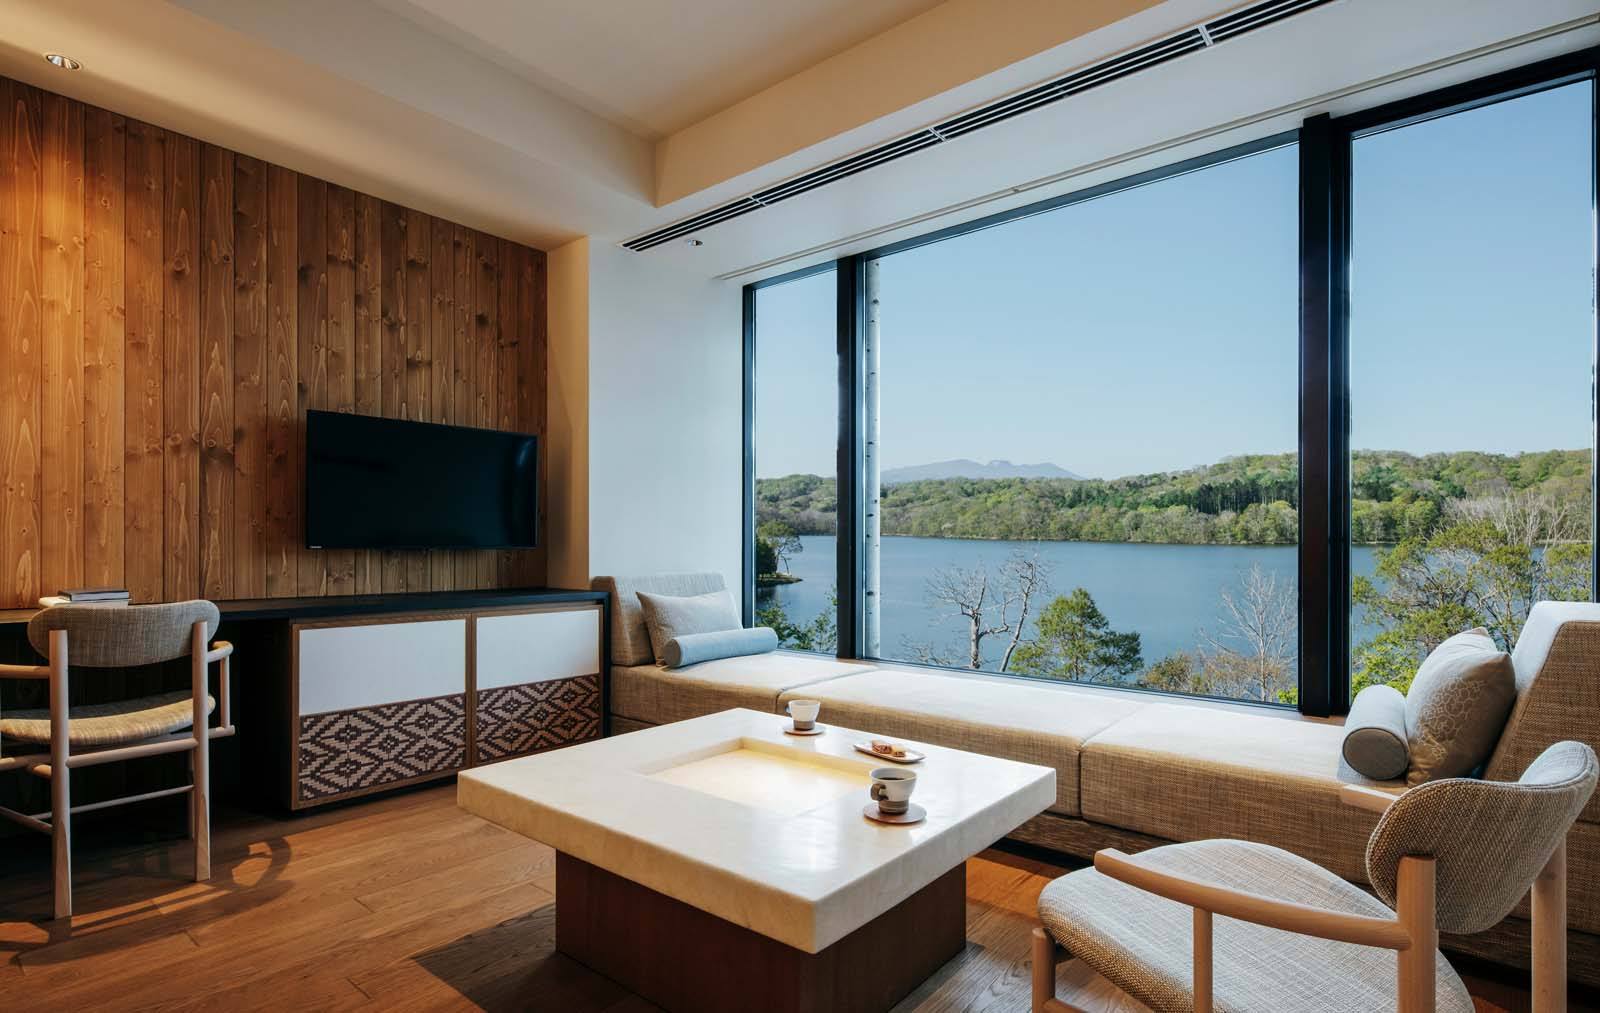 Hoshino Resorts KAI Poroto guest room overlooking lake